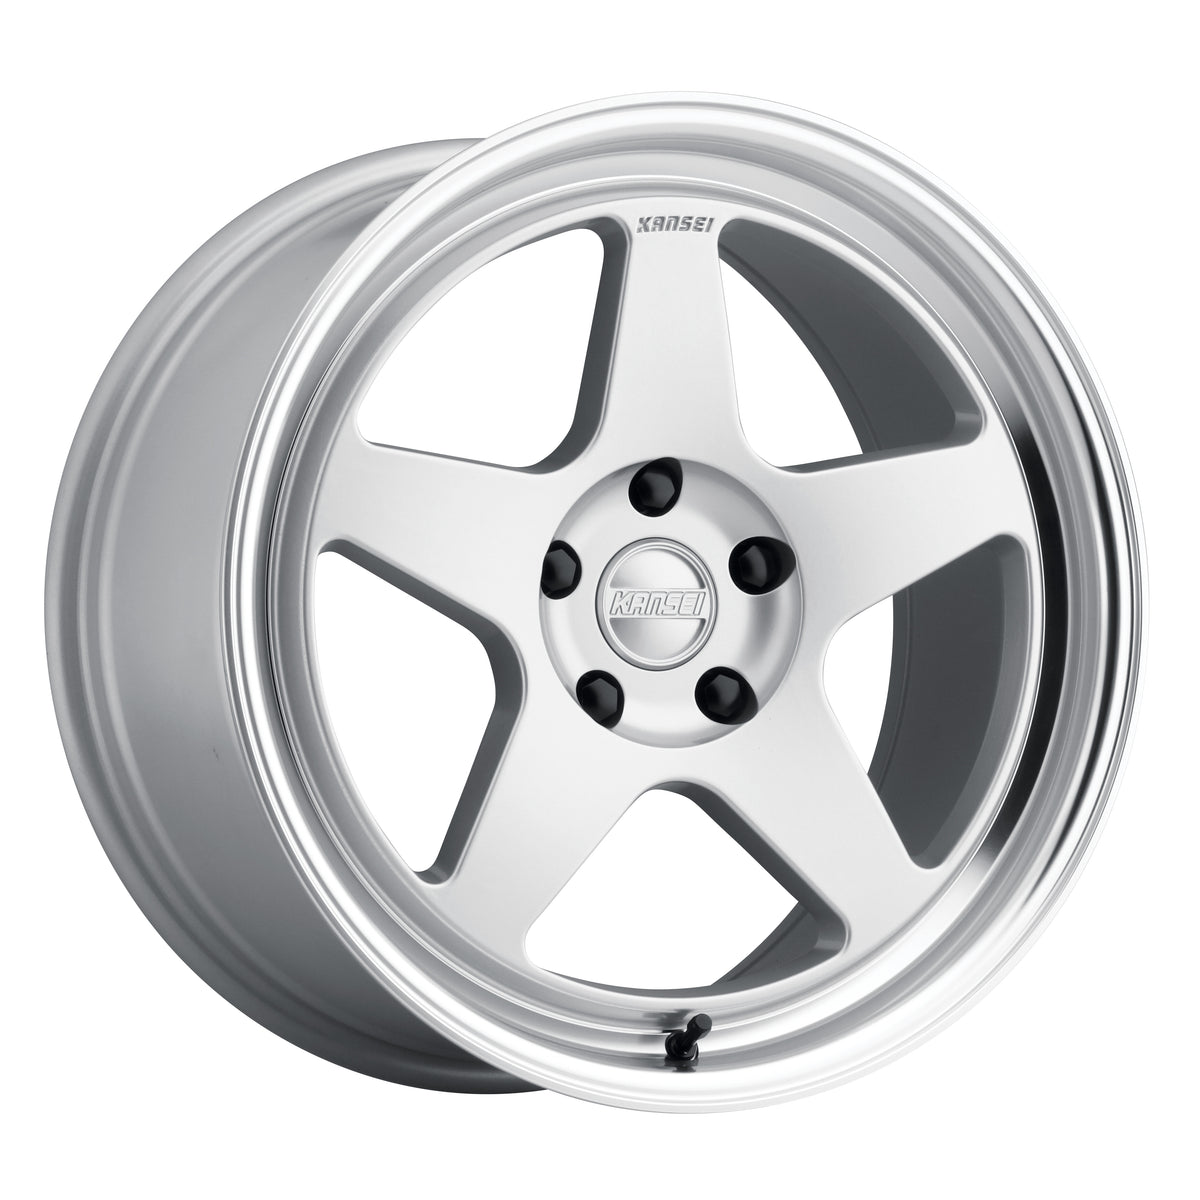 K12H KNP Wheel, Size: 19" x 9.50", Bolt Pattern: 5 x 112 mm, Backspace: 6.12" [Finish: Hyper Silver]